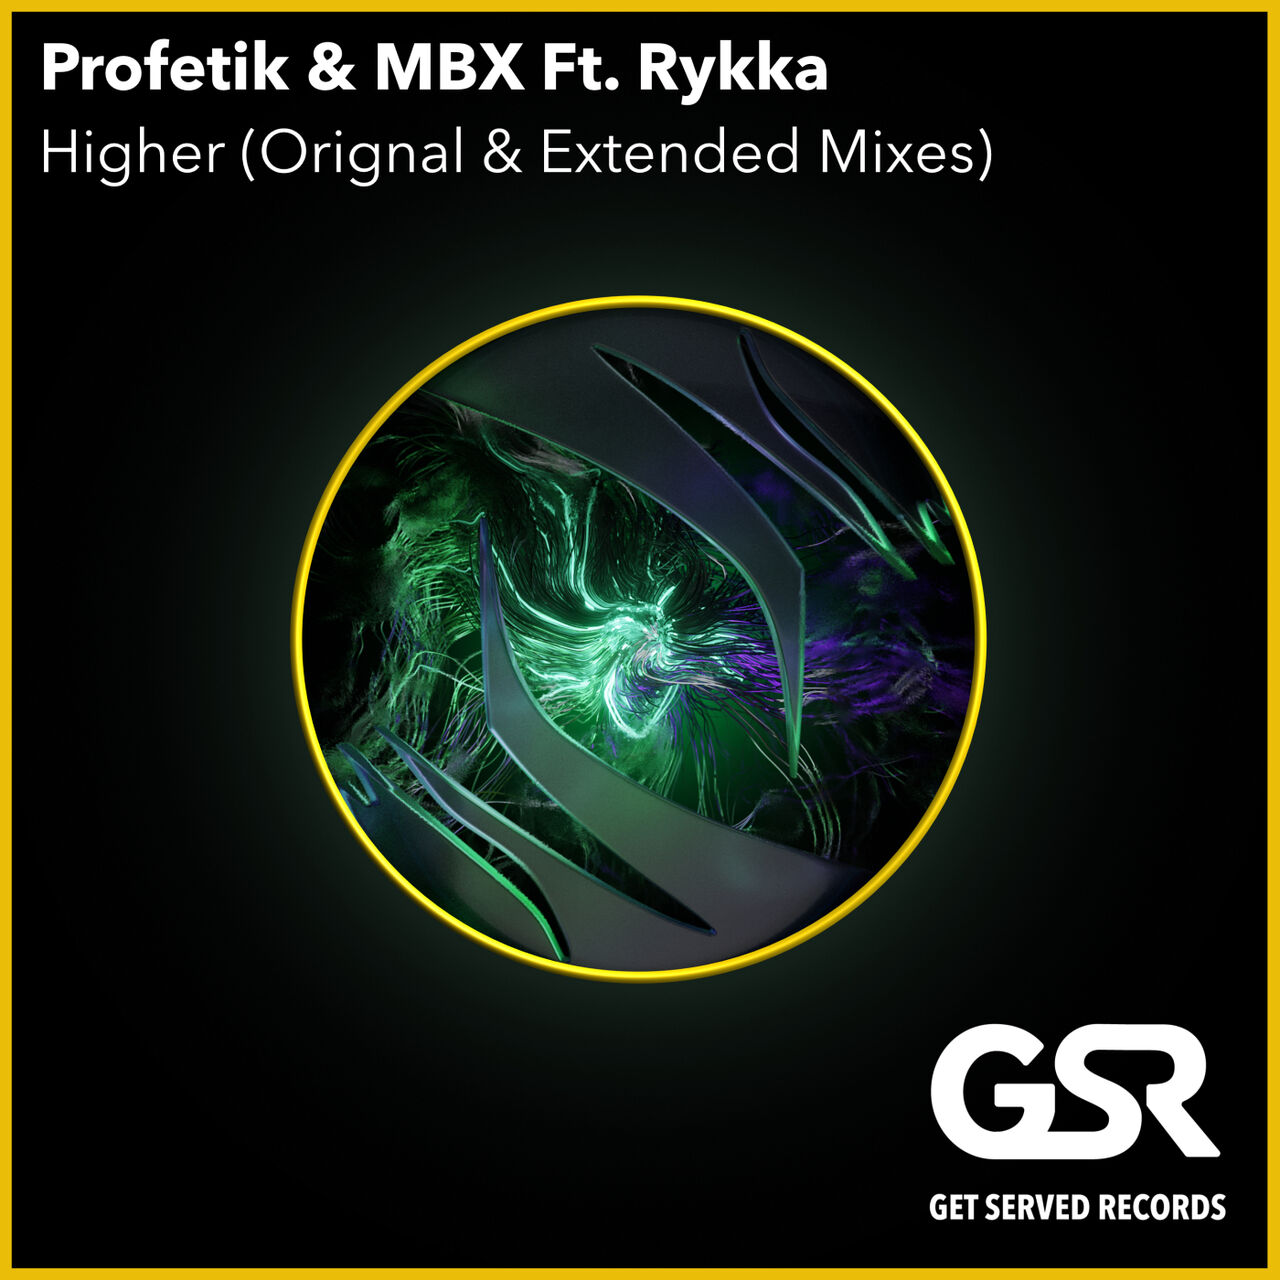 Profetik & MBX ft. featuring Rykka Higher cover artwork